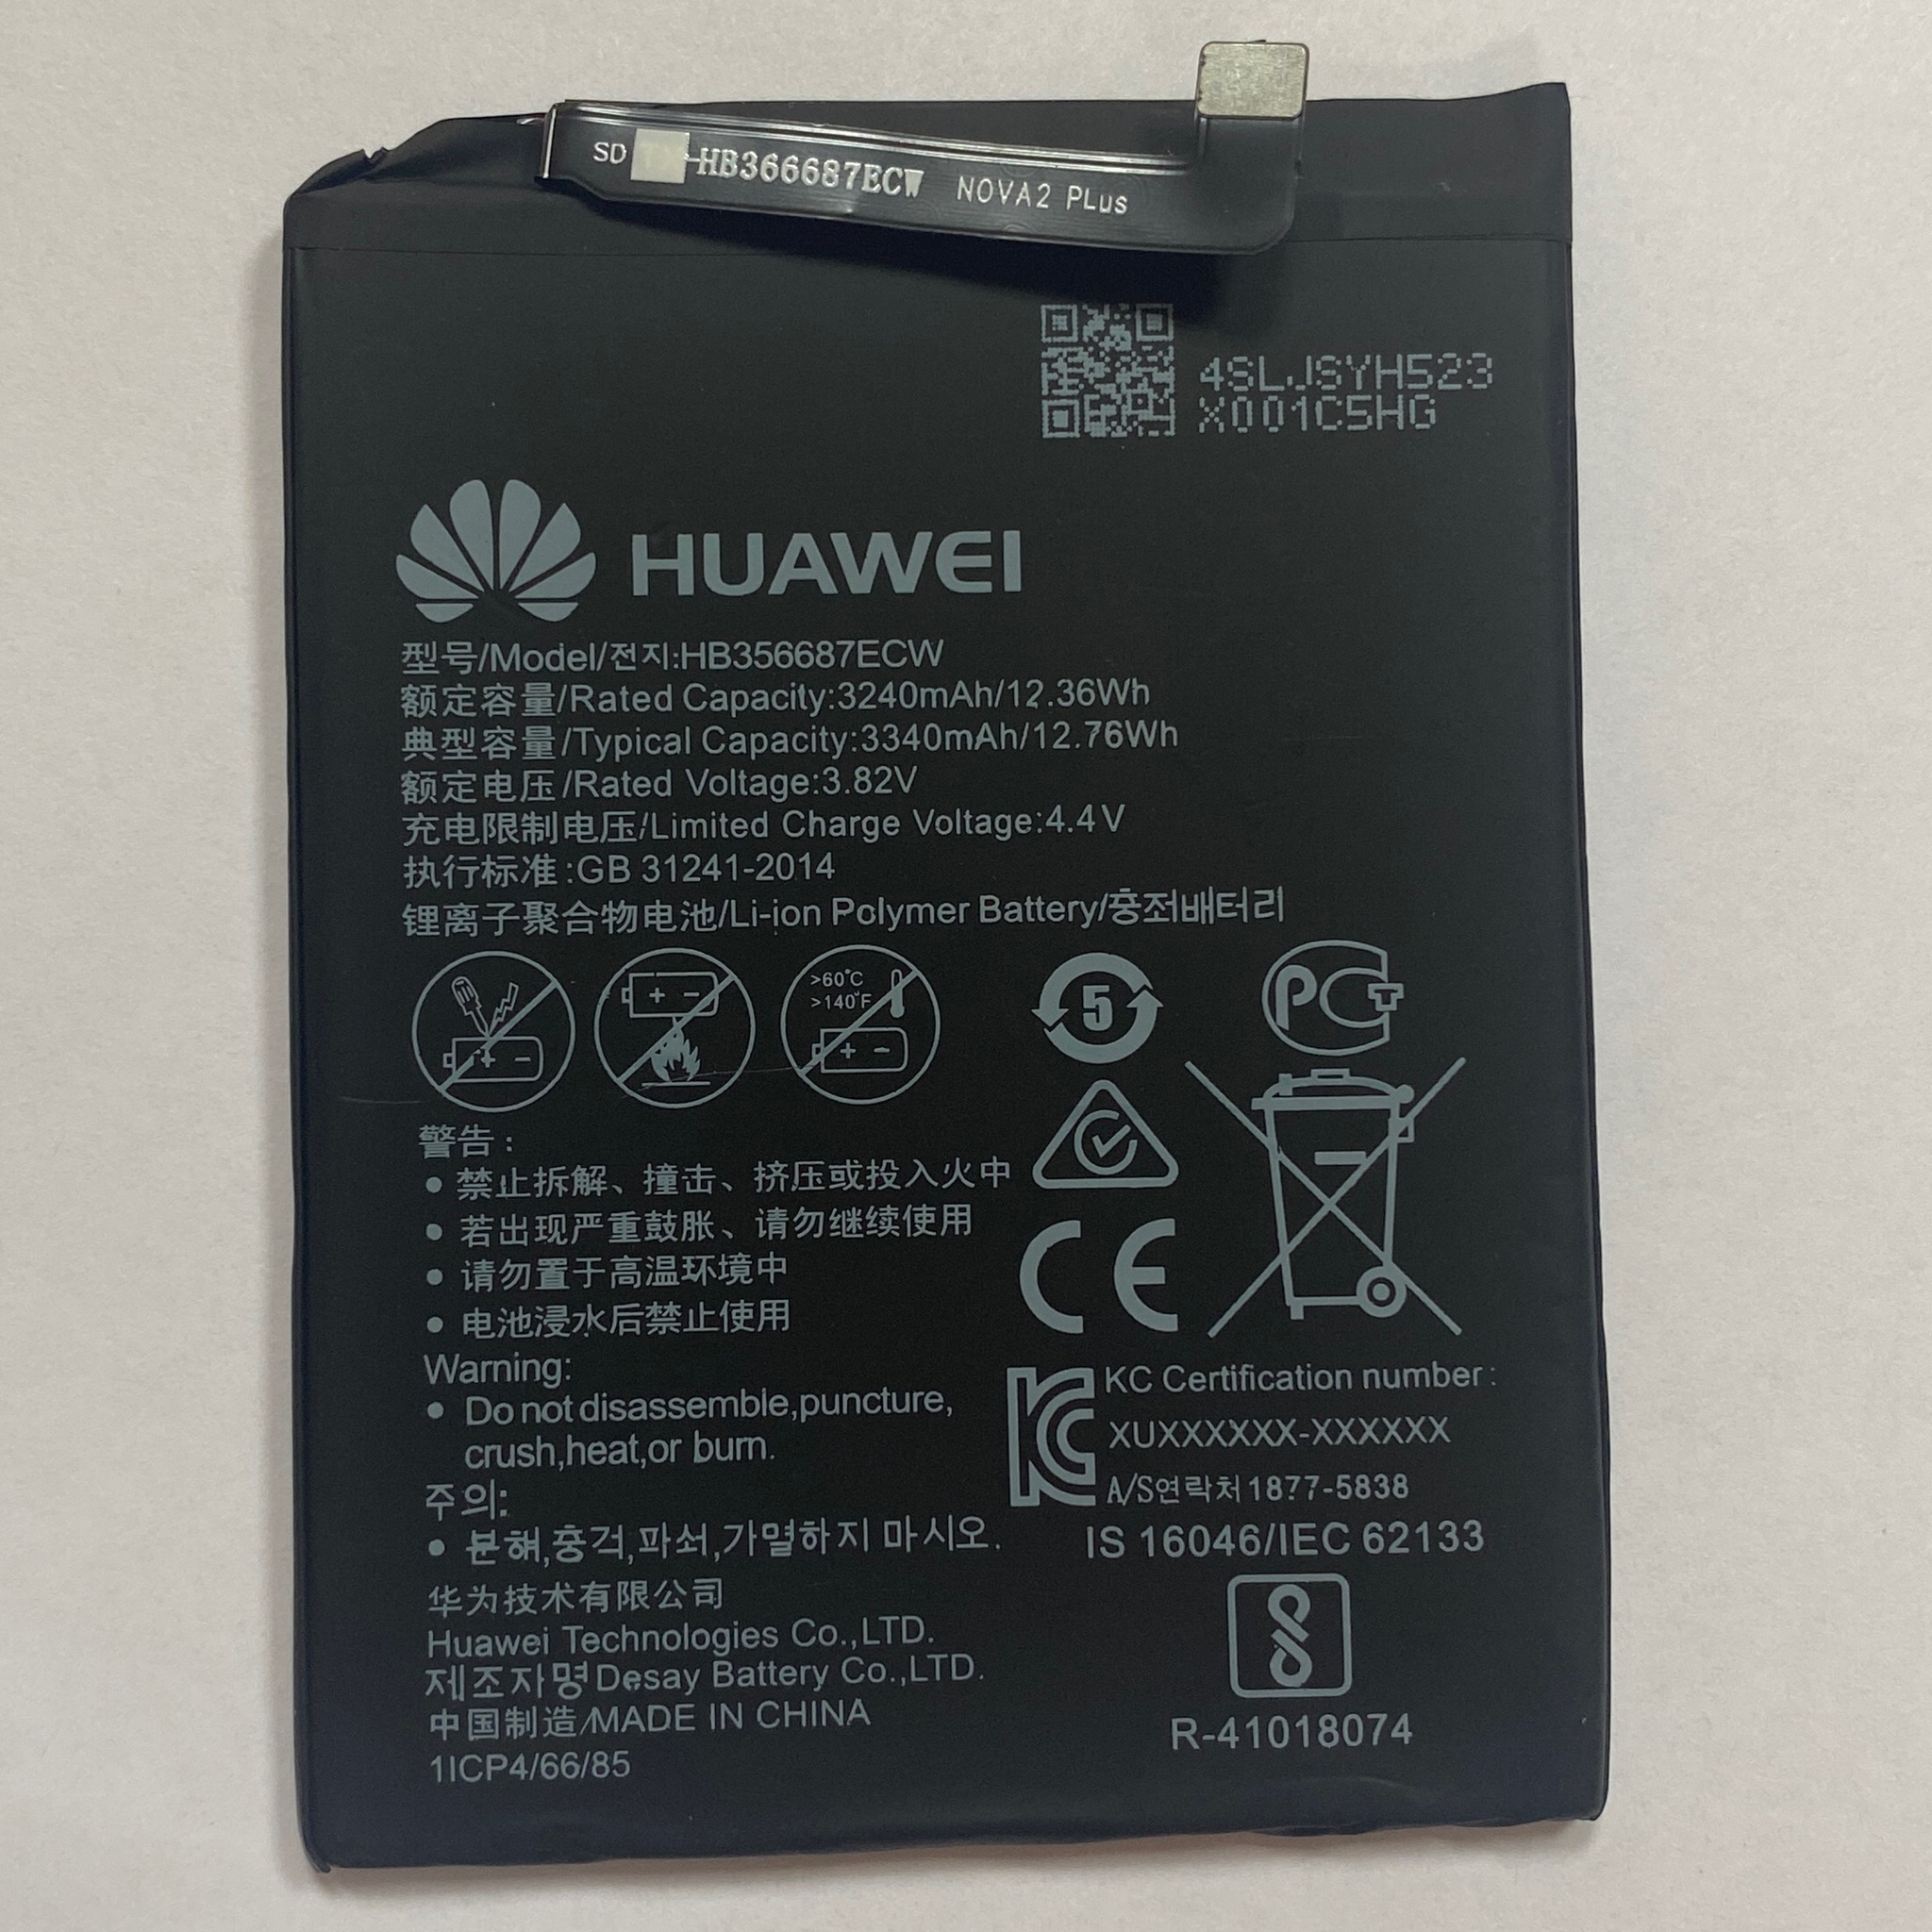 P30 lite аккумулятор. Аккумулятор для Huawei Nova 2. Аккумулятор для Huawei Nova 2i. Hb356687ecw аккумулятор. Аккумулятор hb356687ecw для Huawei Nova 2 Plus/2i/3i/p30 Lite/Honor 20s - Battery collection.